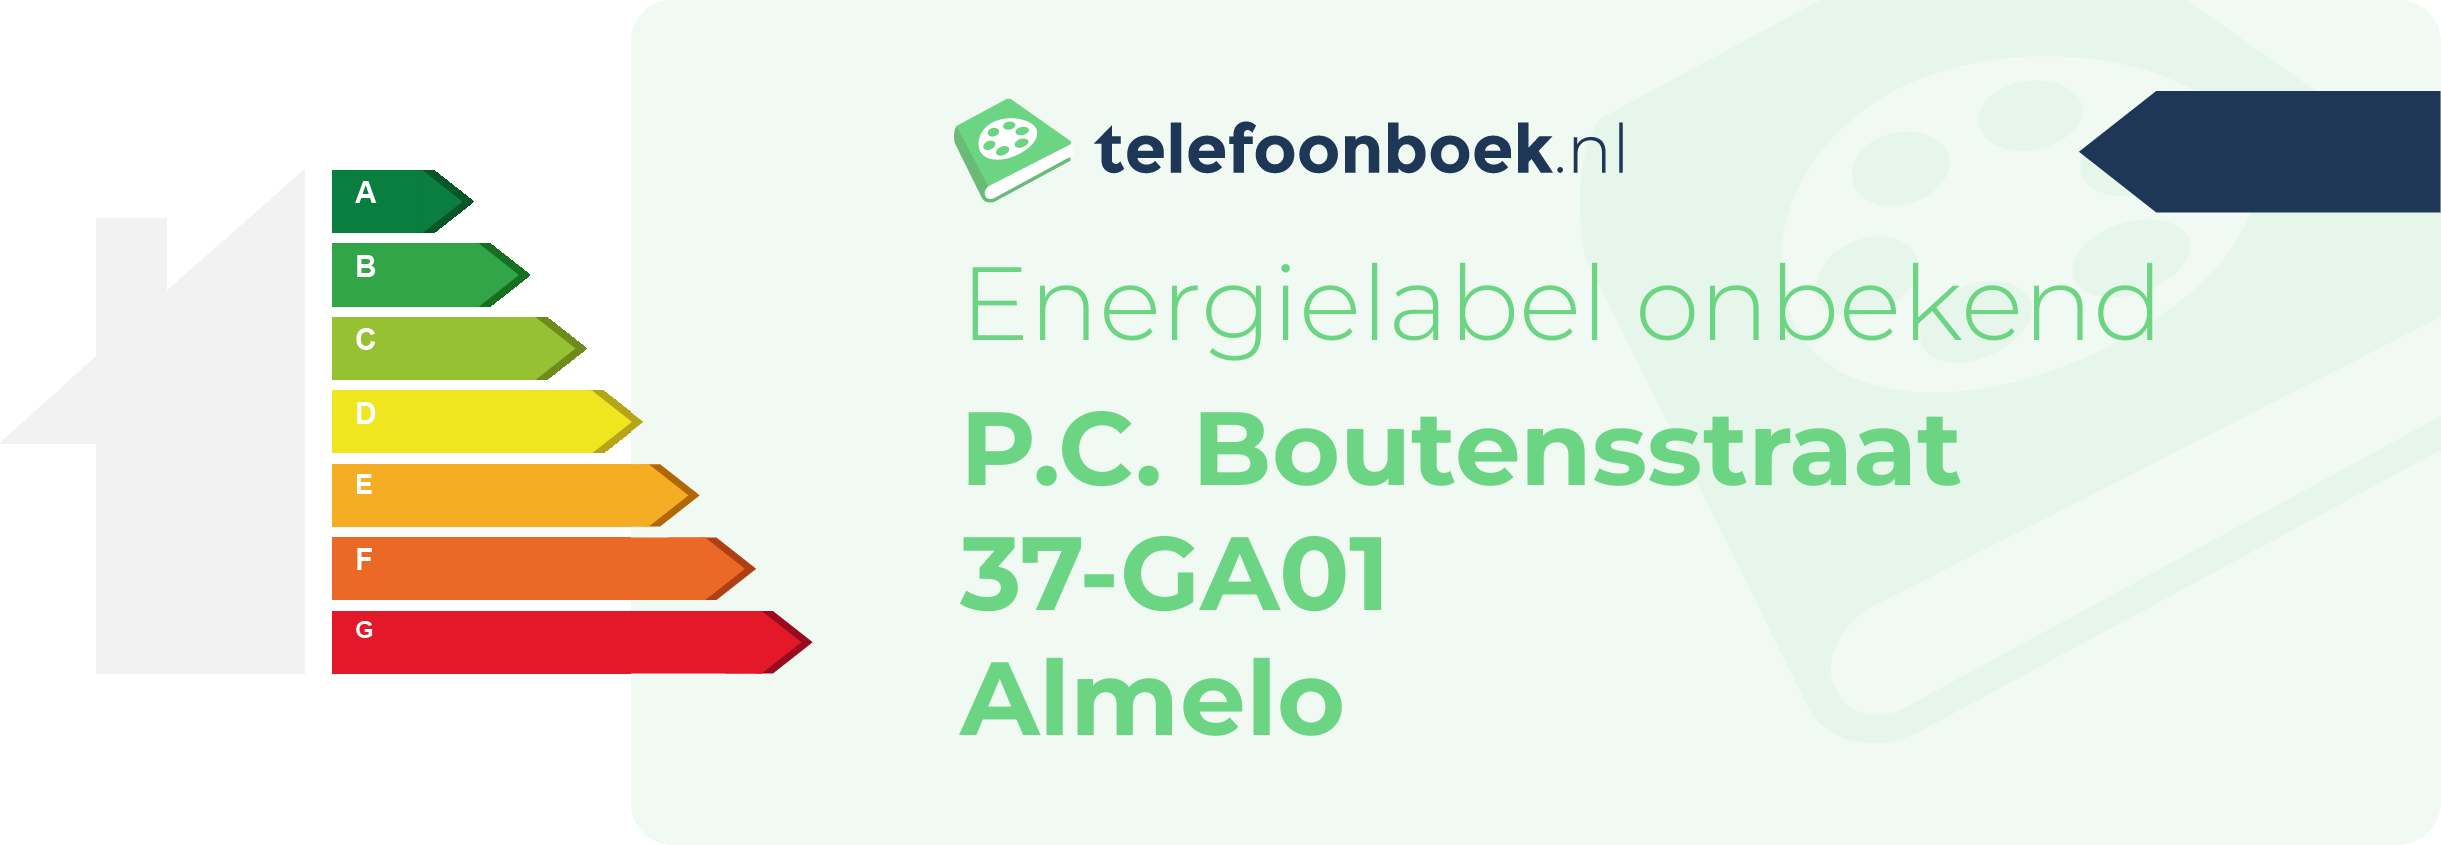 Energielabel P.C. Boutensstraat 37-GA01 Almelo